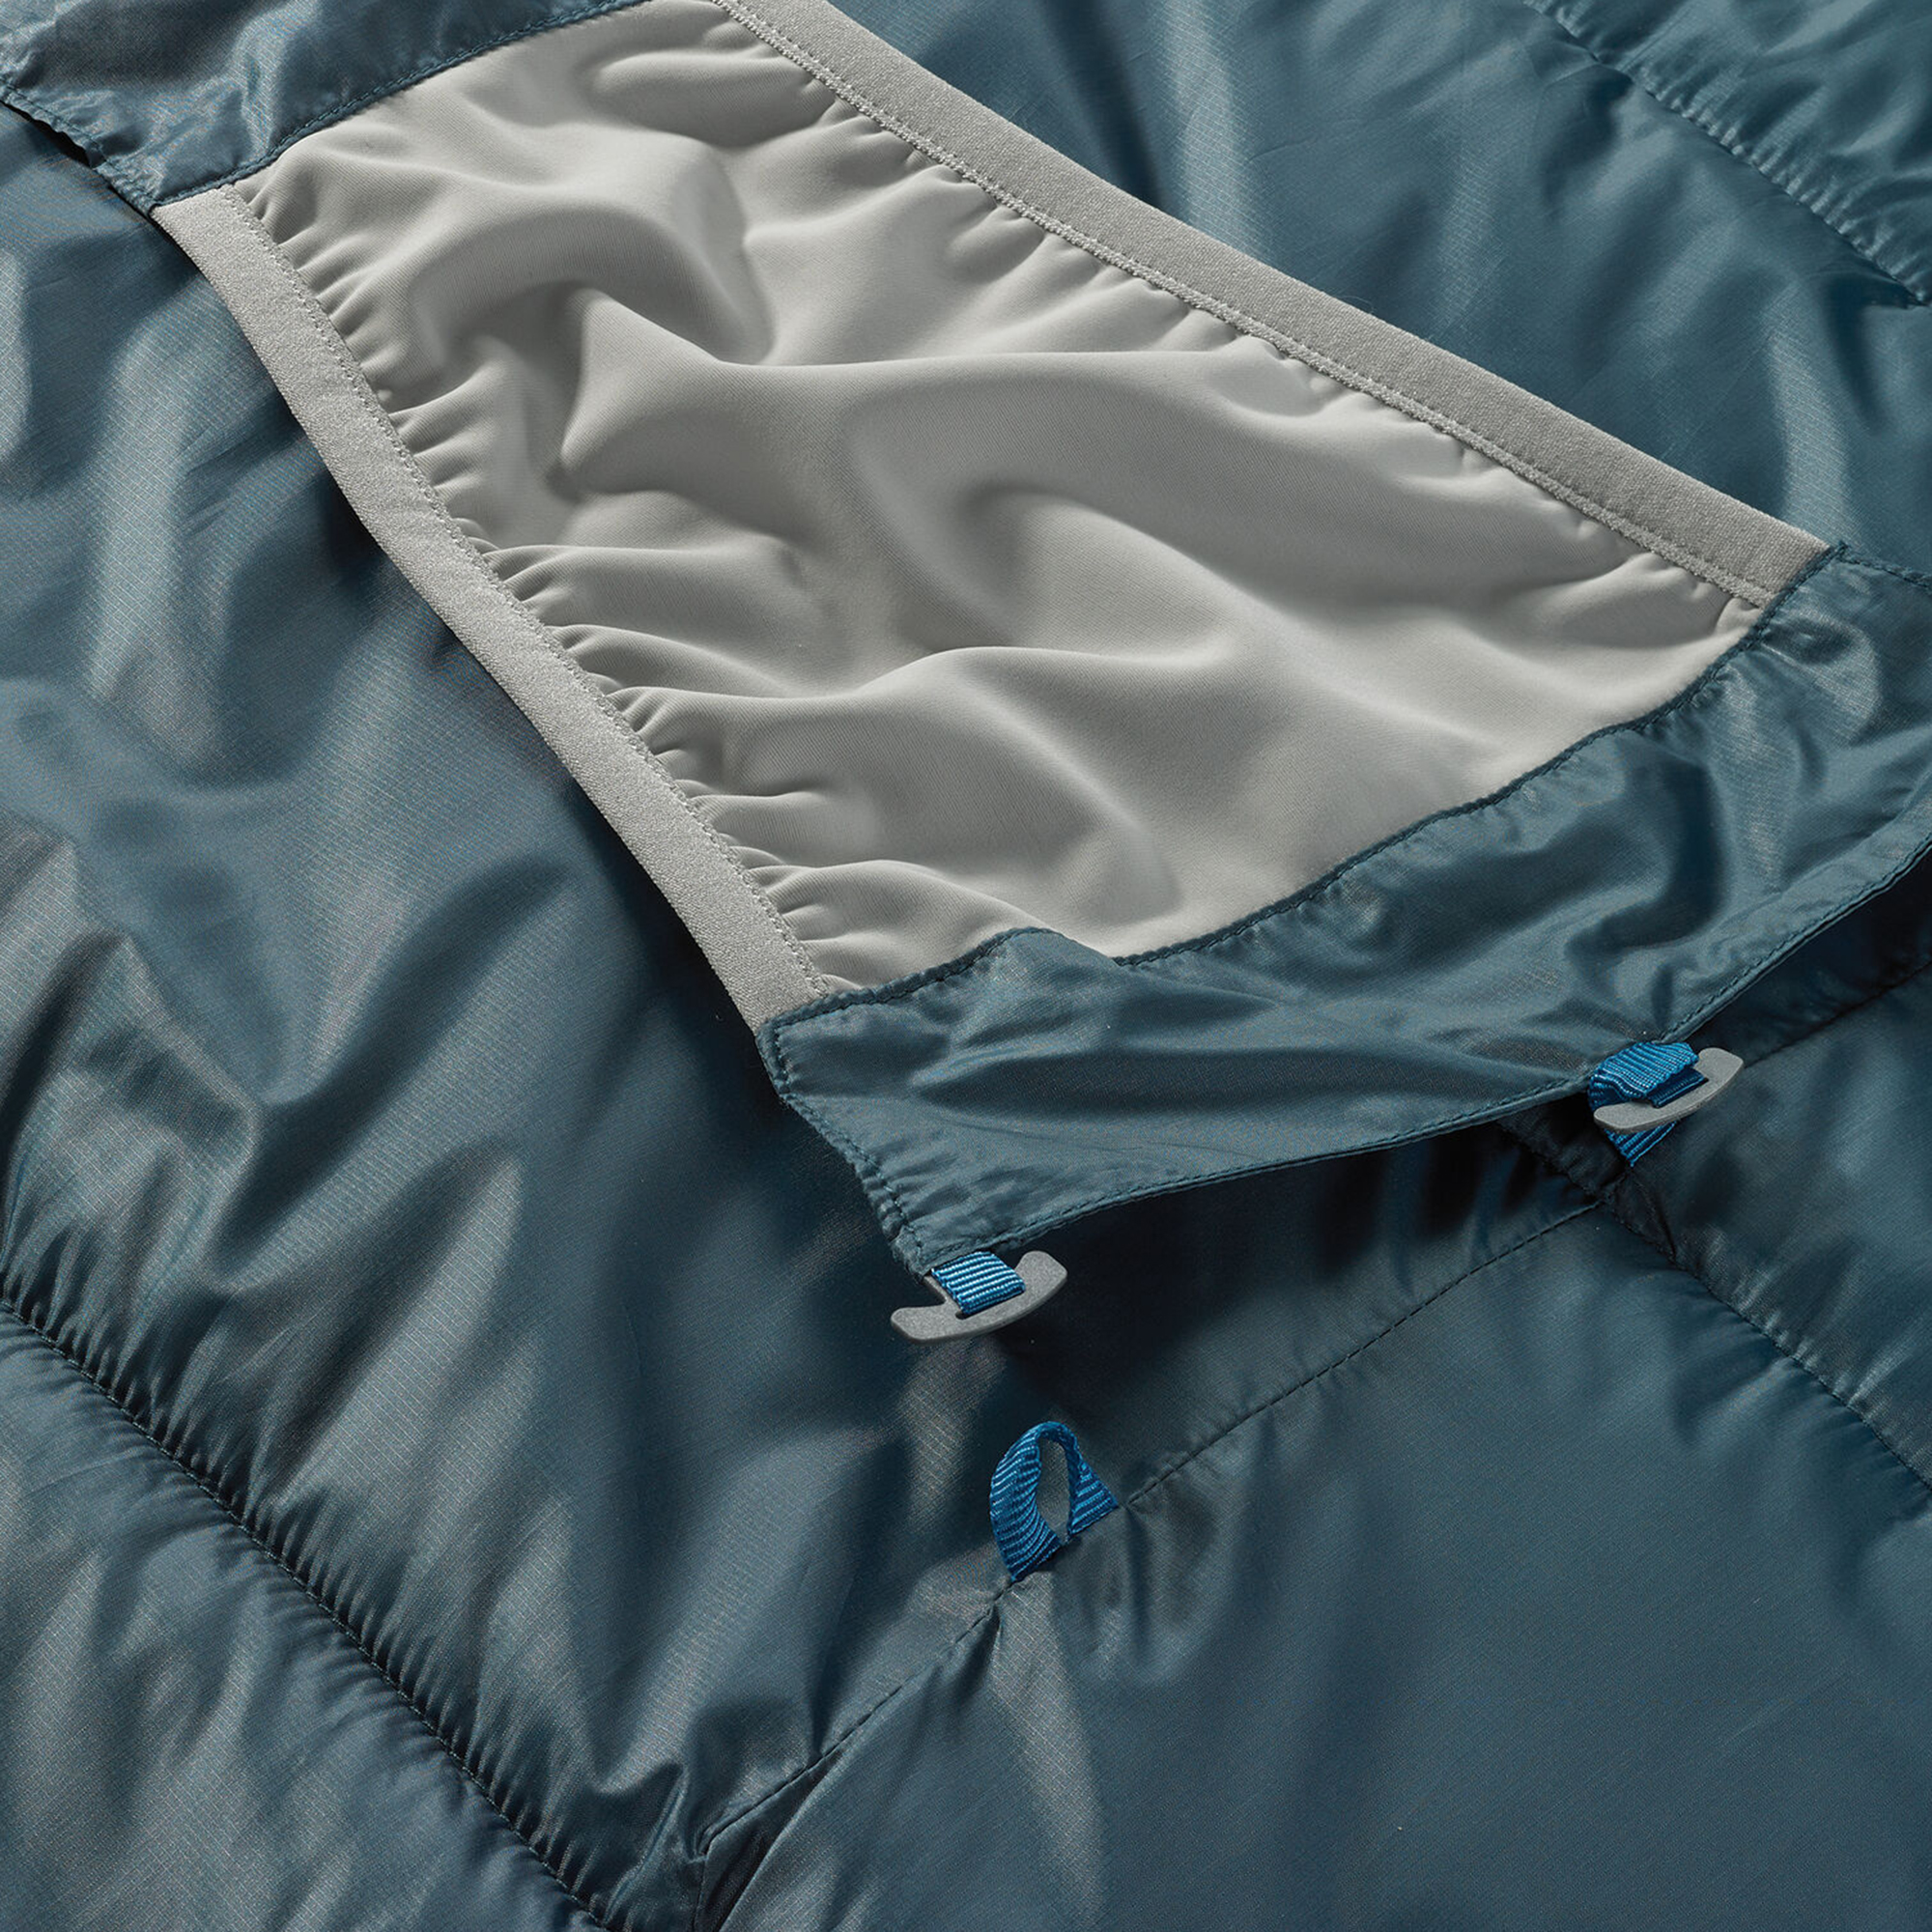 ThermaRest Saros 20 Lightweight 3-Season Sleeping Bag